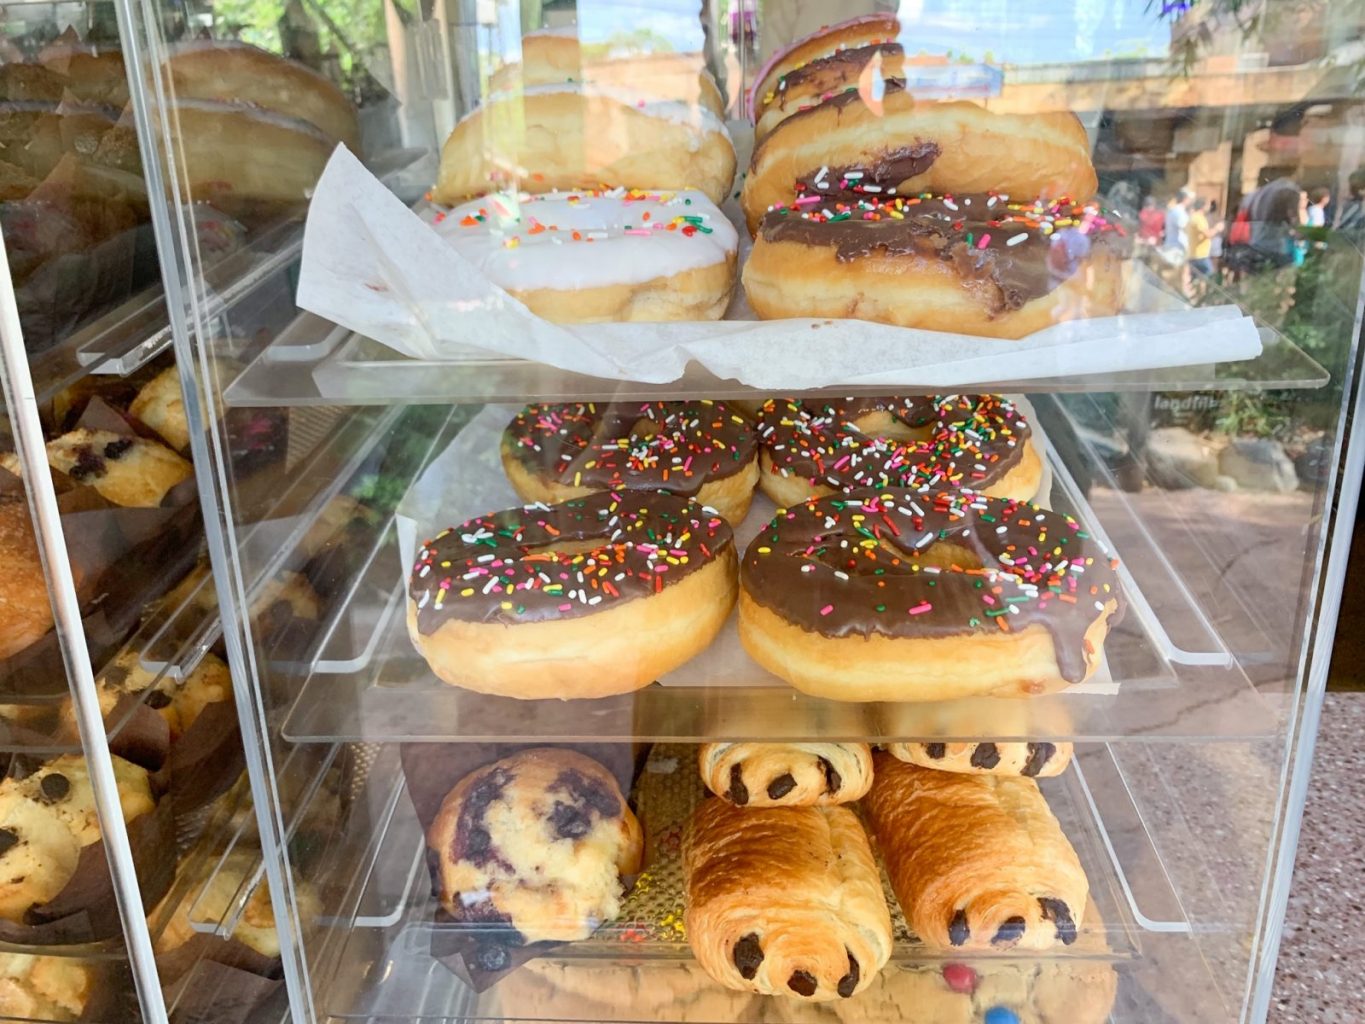 animal kingdom breakfast pastries and donuts at Kusafiri coffee shop and bakery